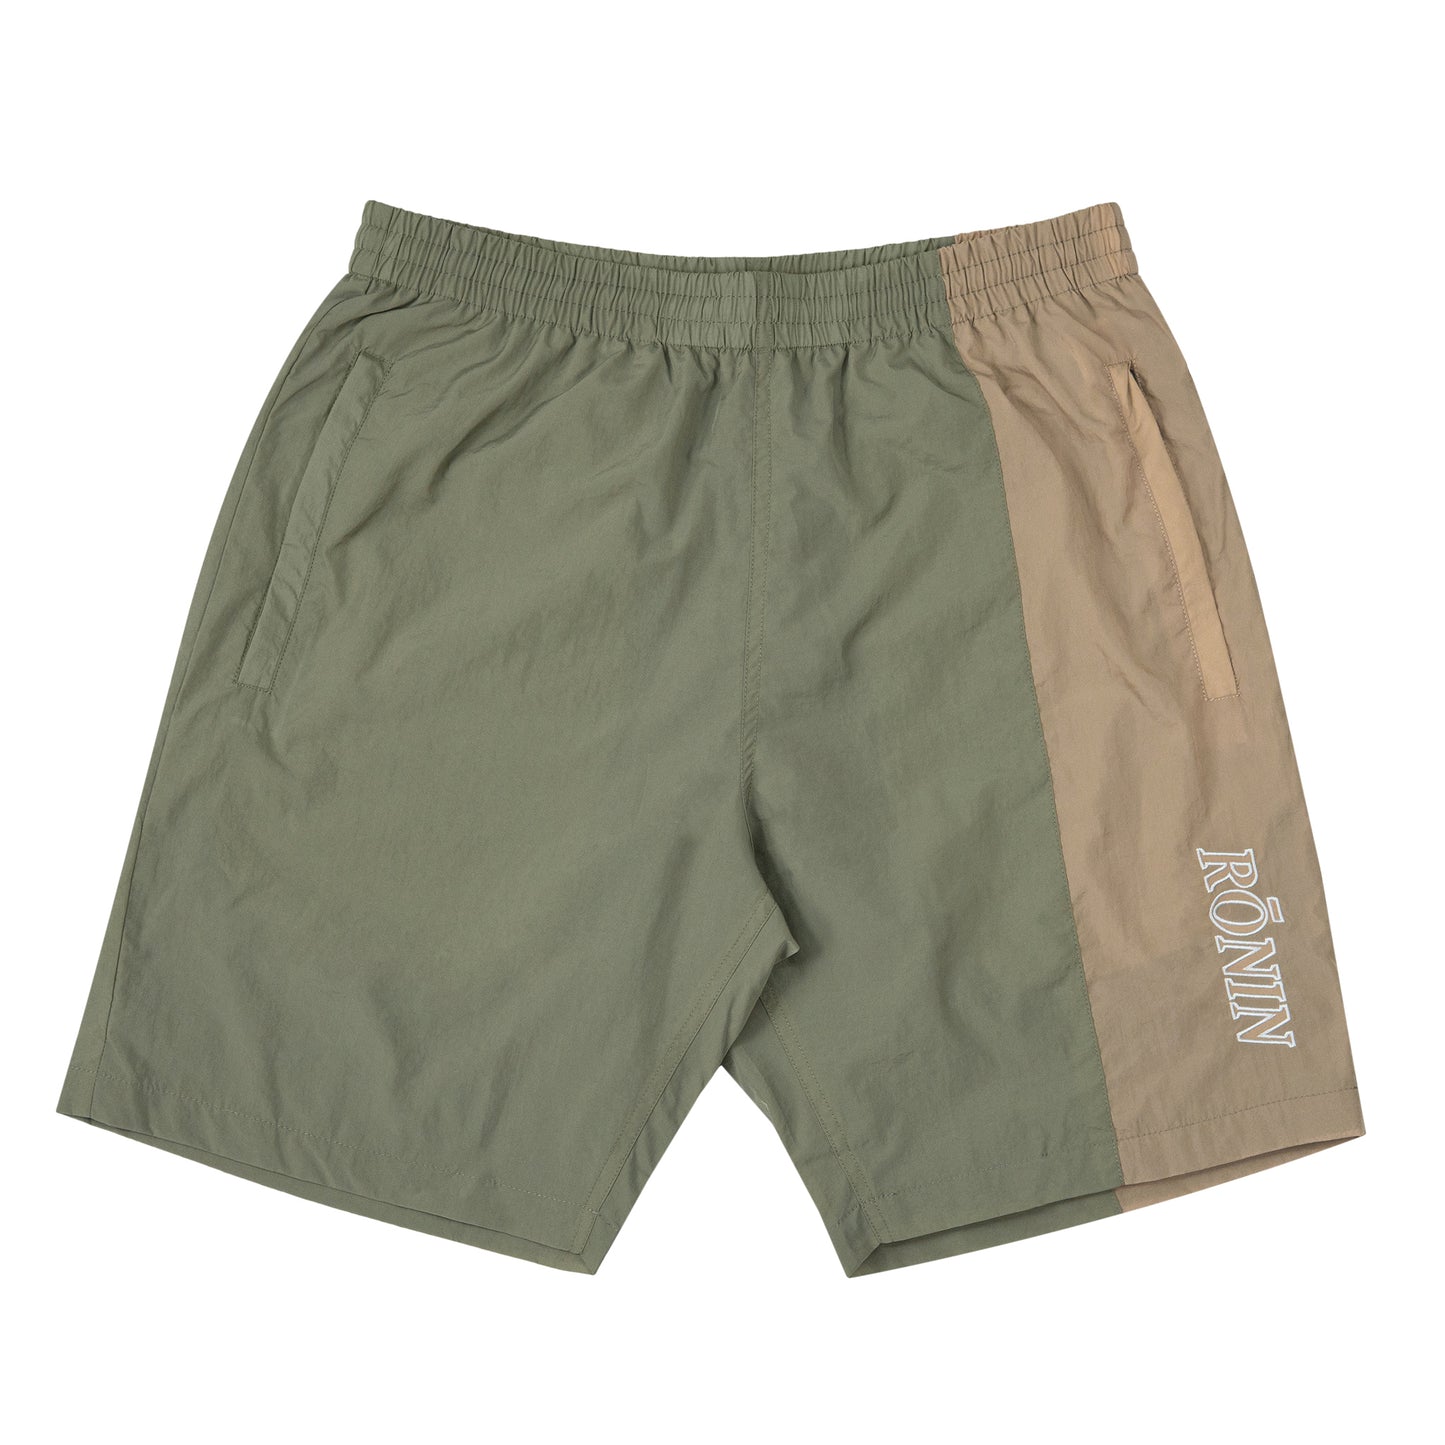 Nylon Water Shorts - Olive|Tan